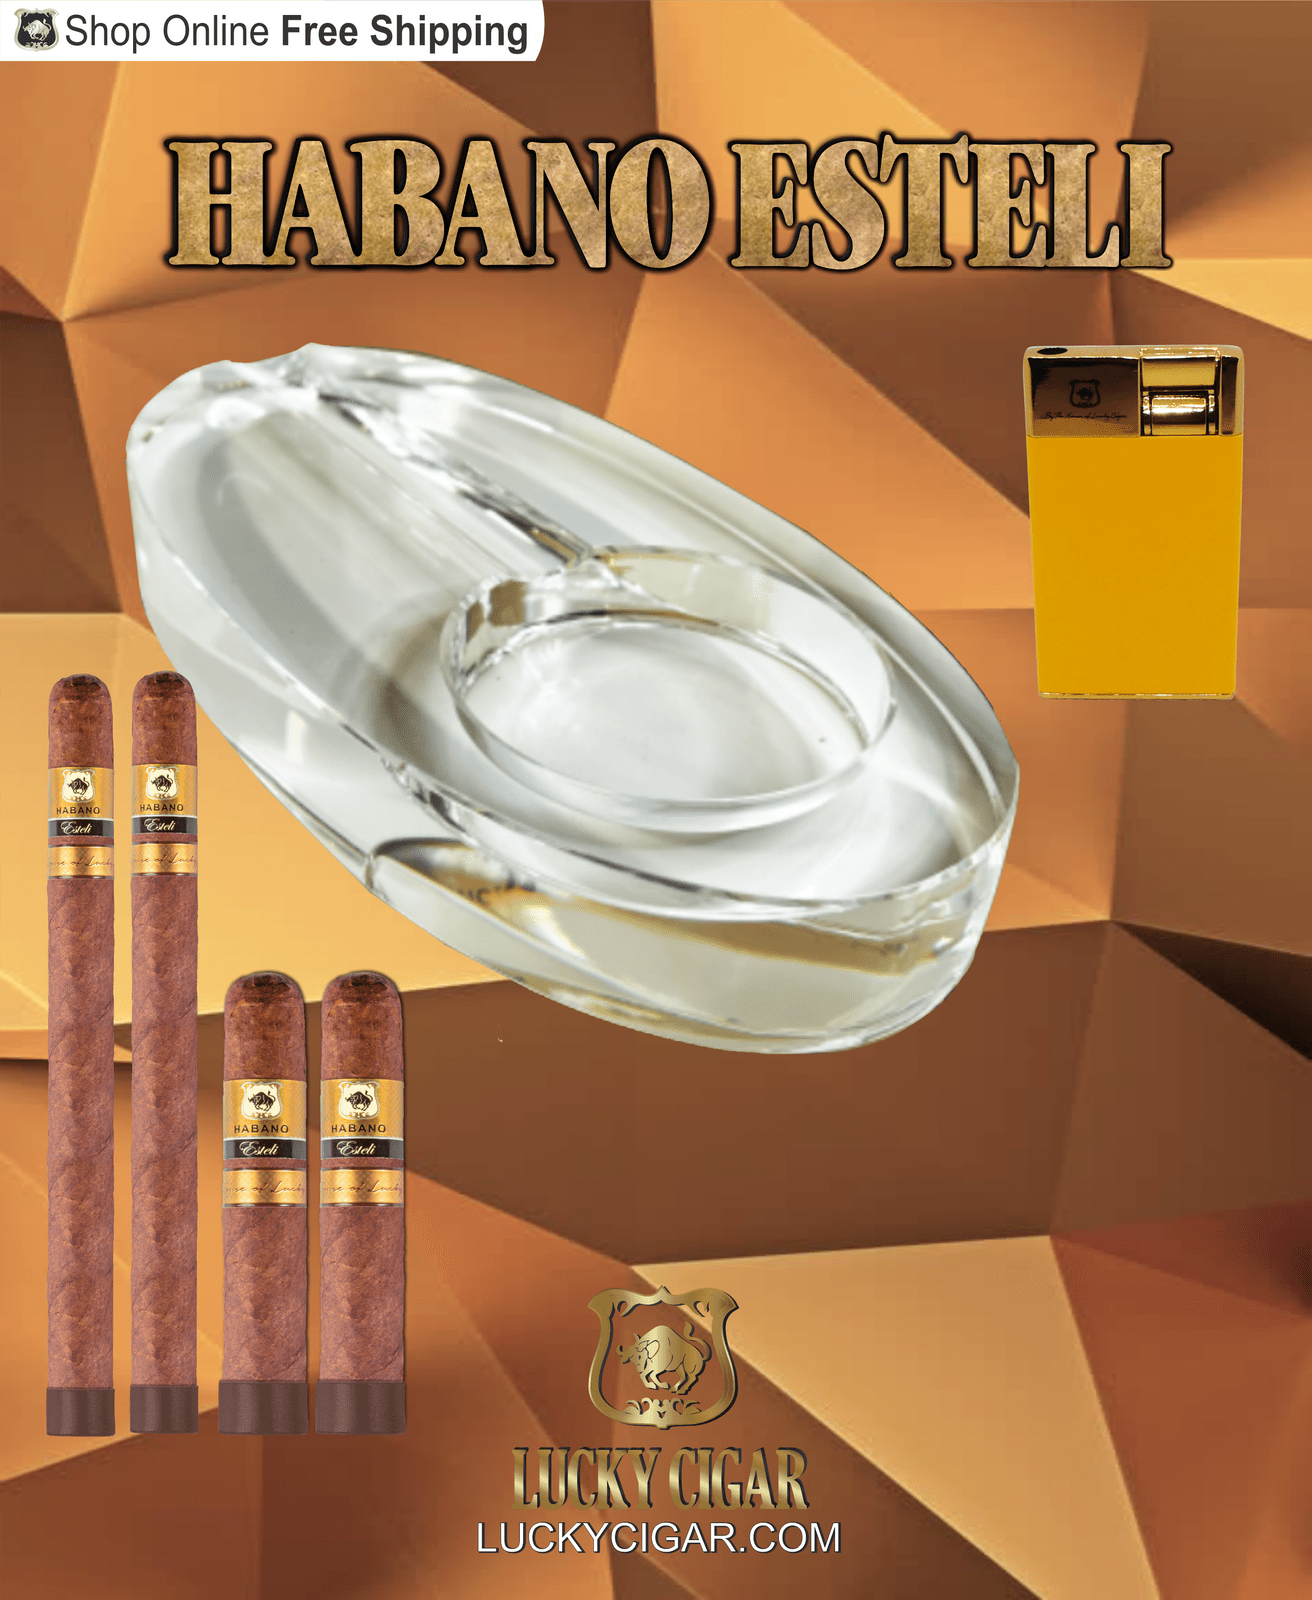 Habano Cigars: Habano Esteli by Lucky Cigar: Set of 4 Cigars, 2 Churchill, 2 Robusto with Ashtray, Lighter